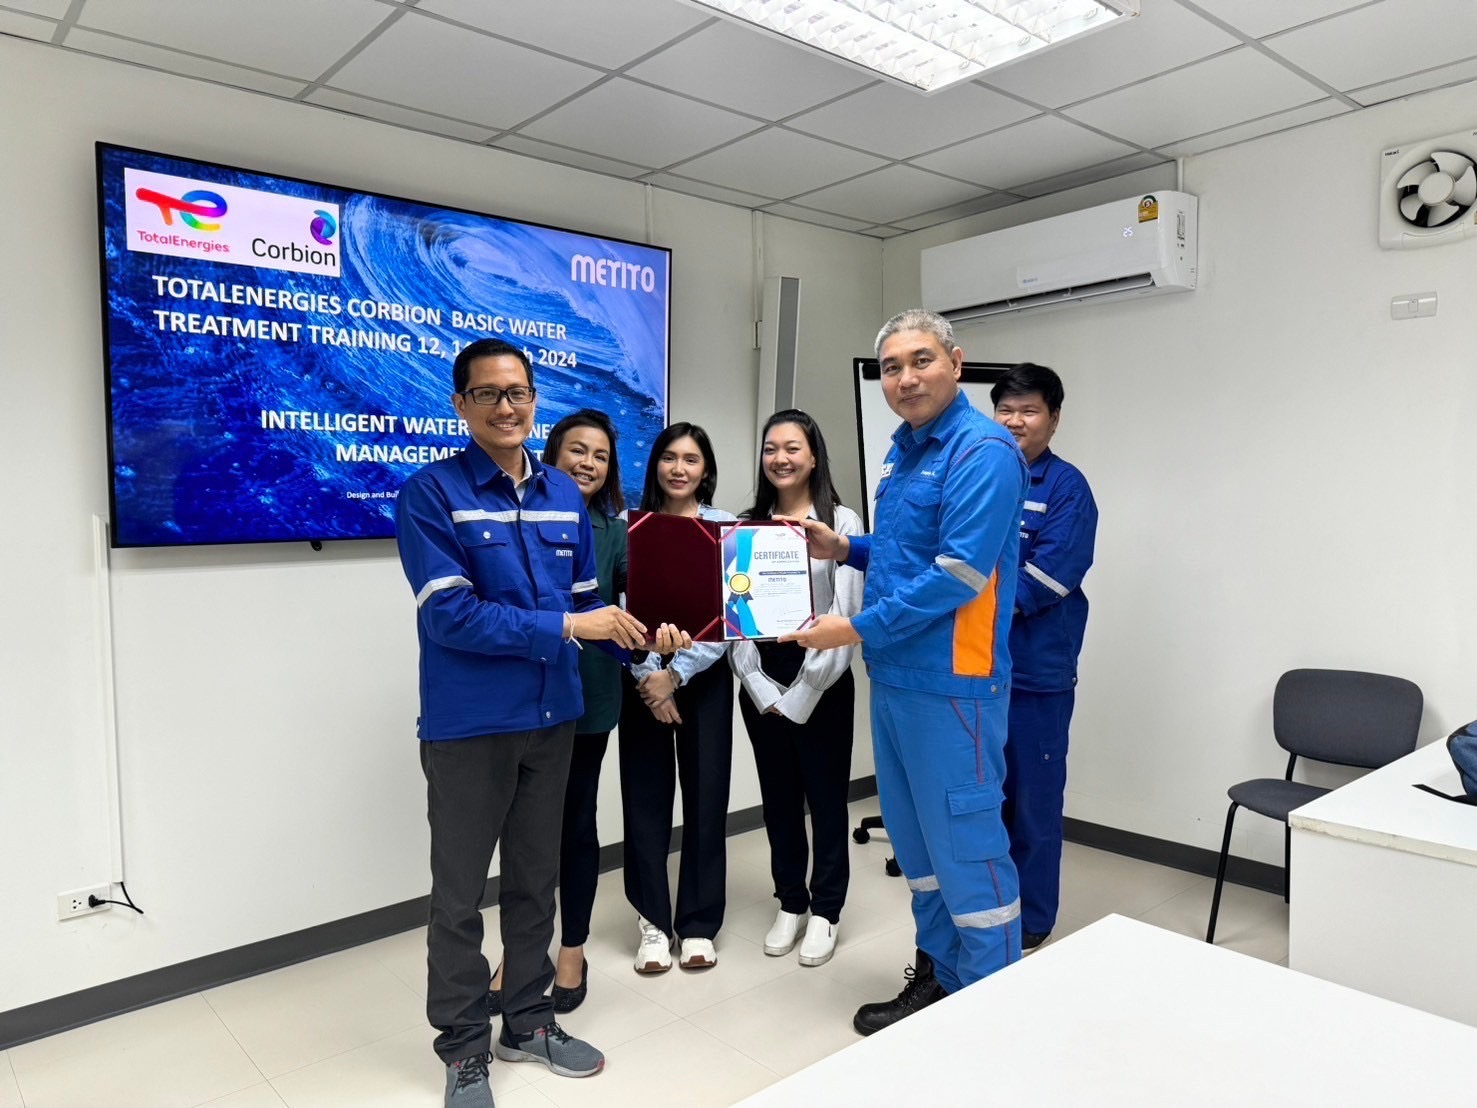 Metito Thailand’s Training for TotalEnergies Corbion